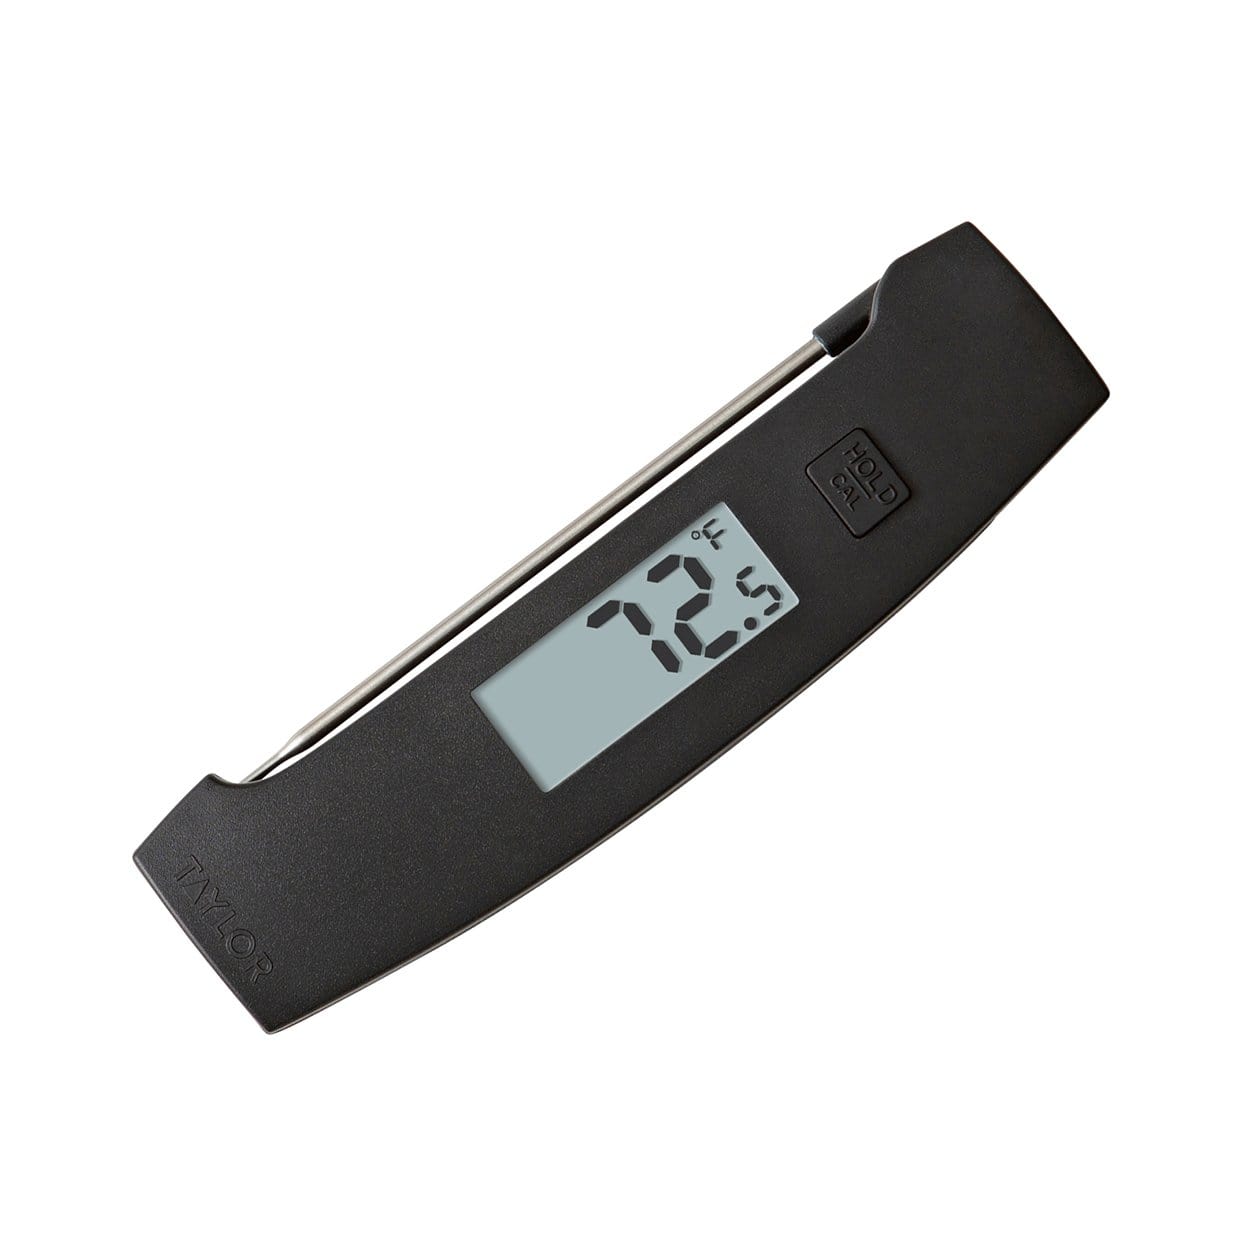 Taylor Digital Thermocouple Thermometer - Black, 1 ct - Ralphs